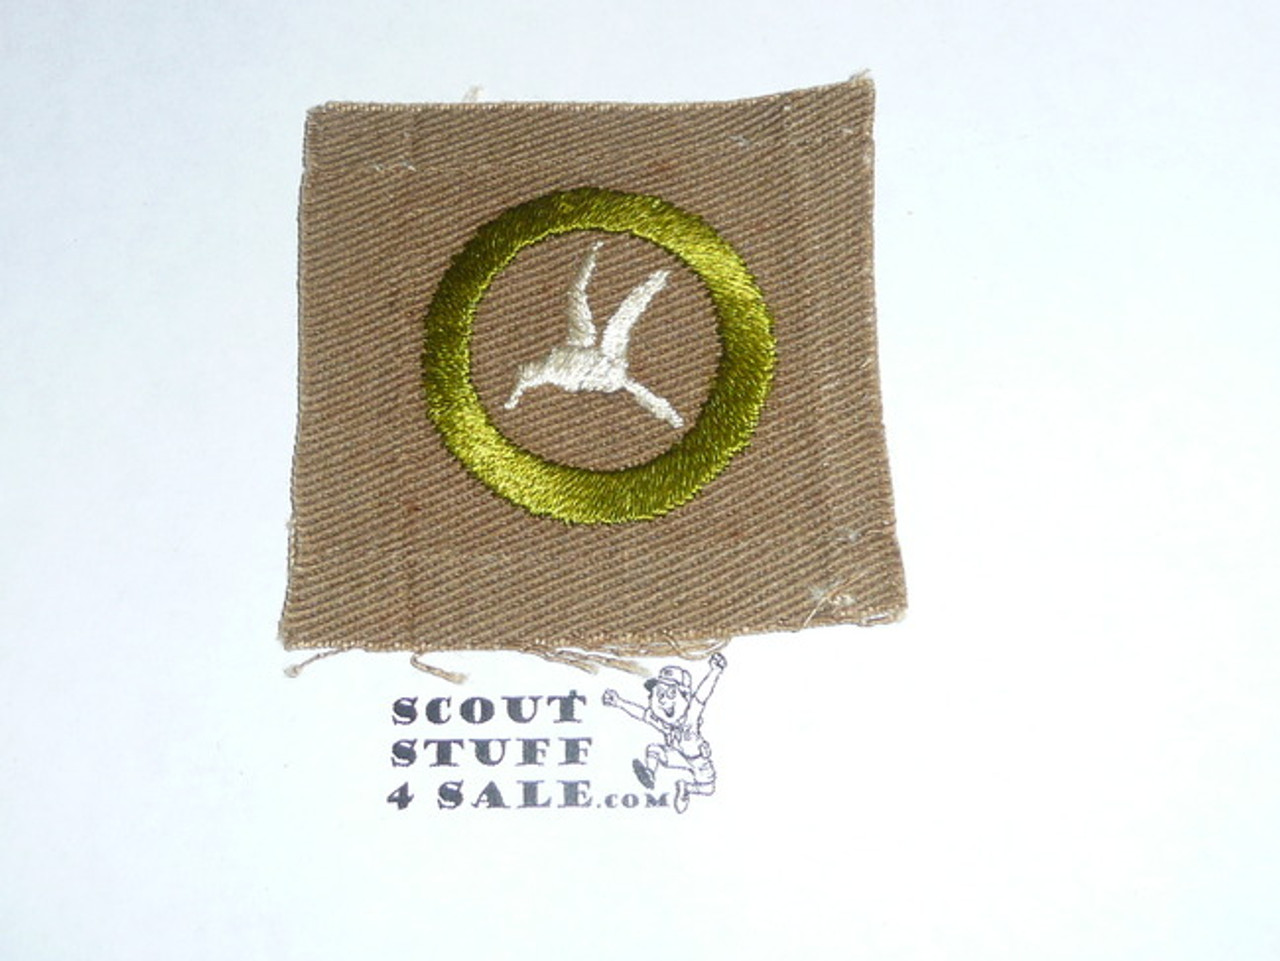 Bird Study - Type A - Square Tan Merit Badge (1911-1933), used